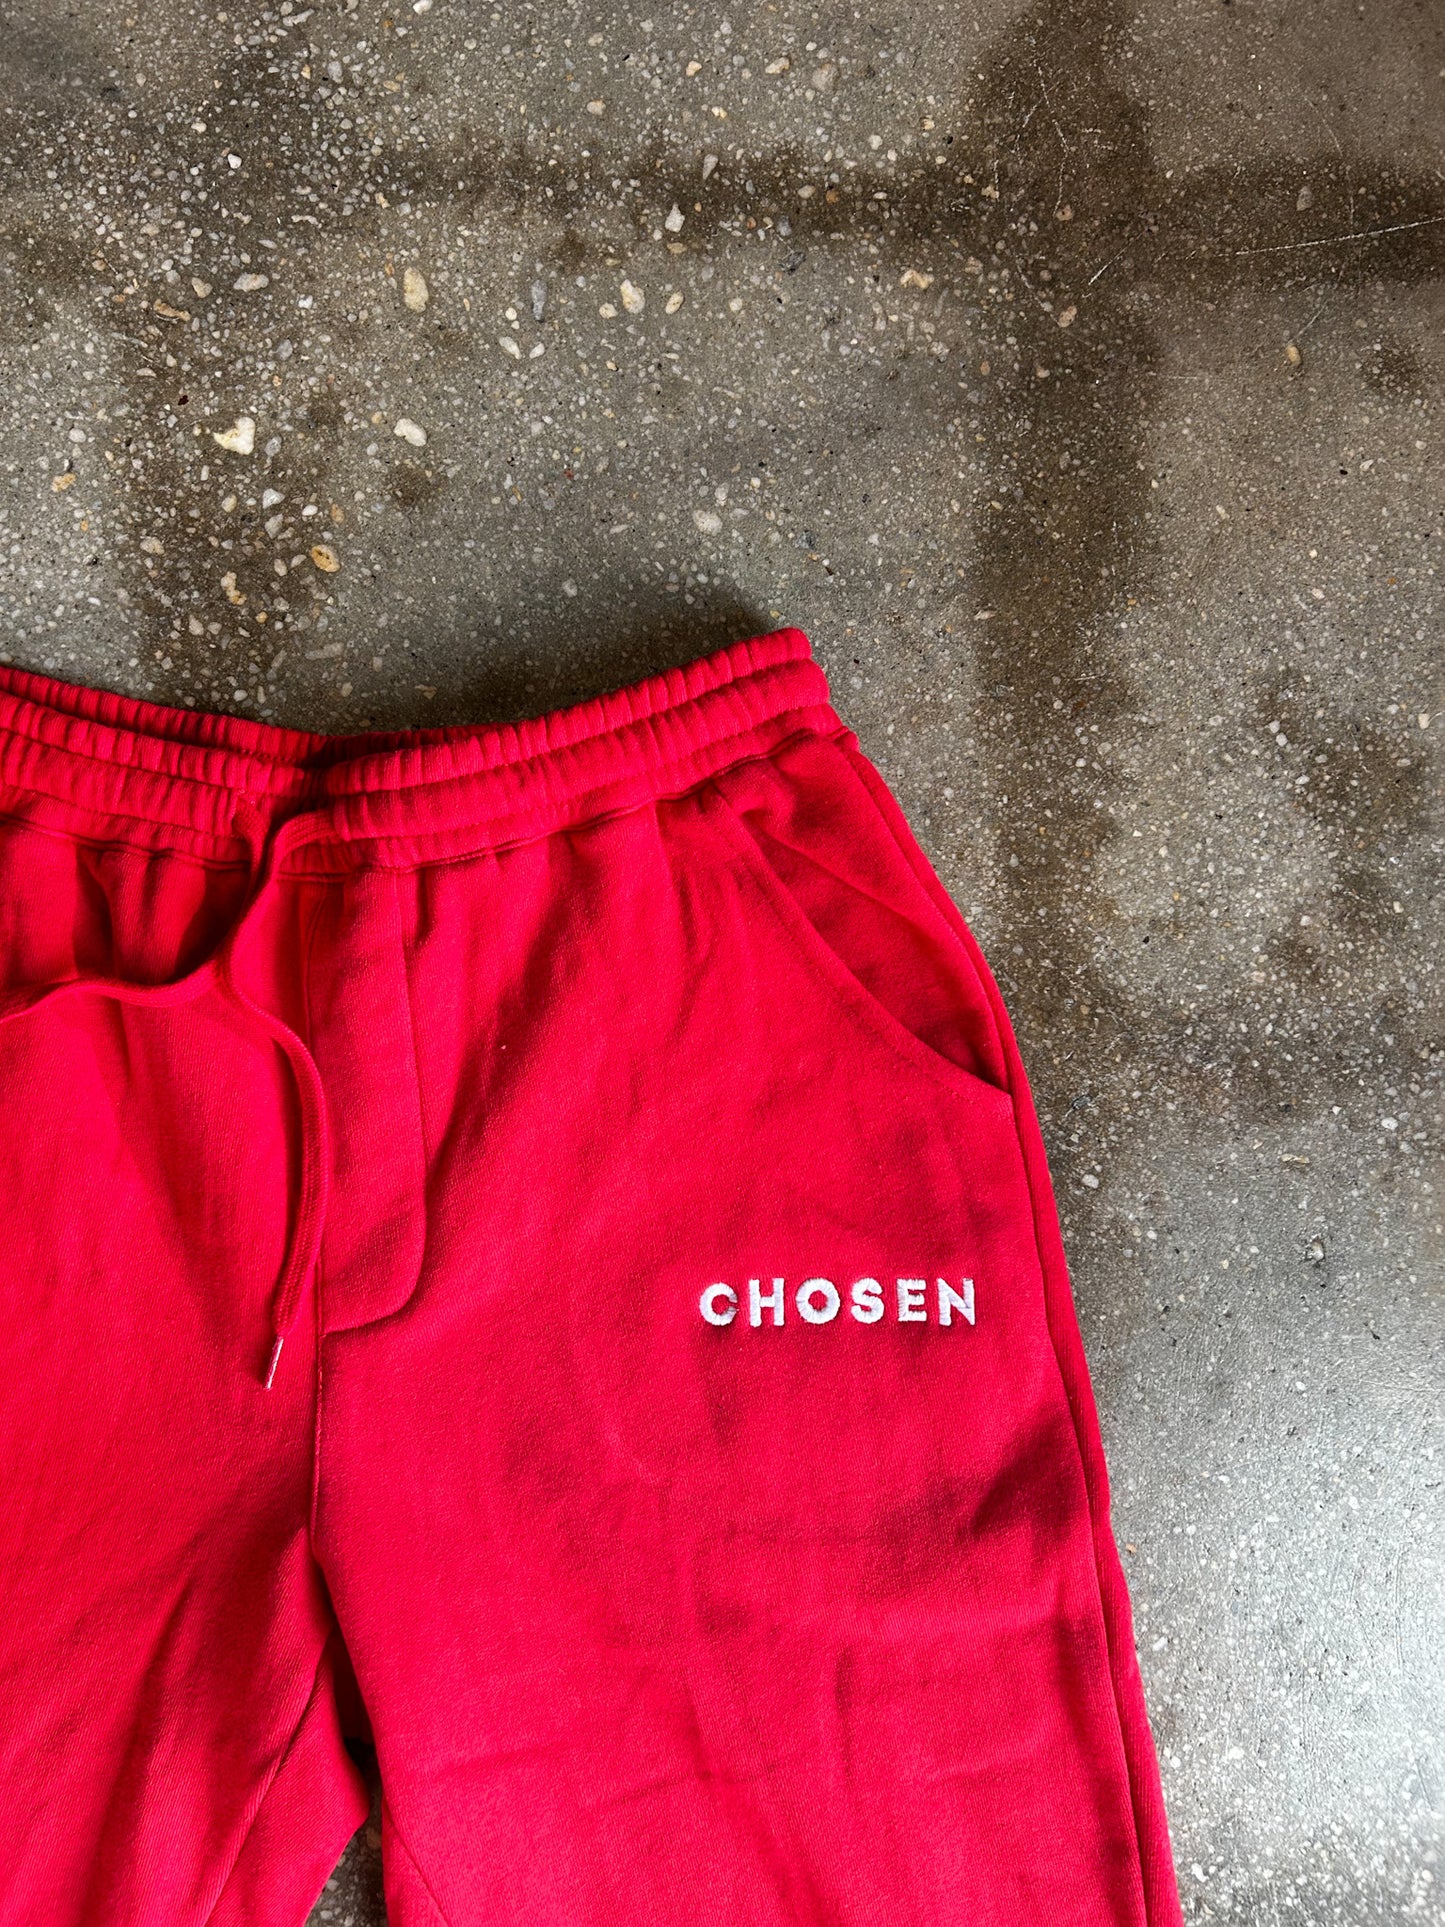 Chosen Embroidered Adult/Unisex Sweatpants